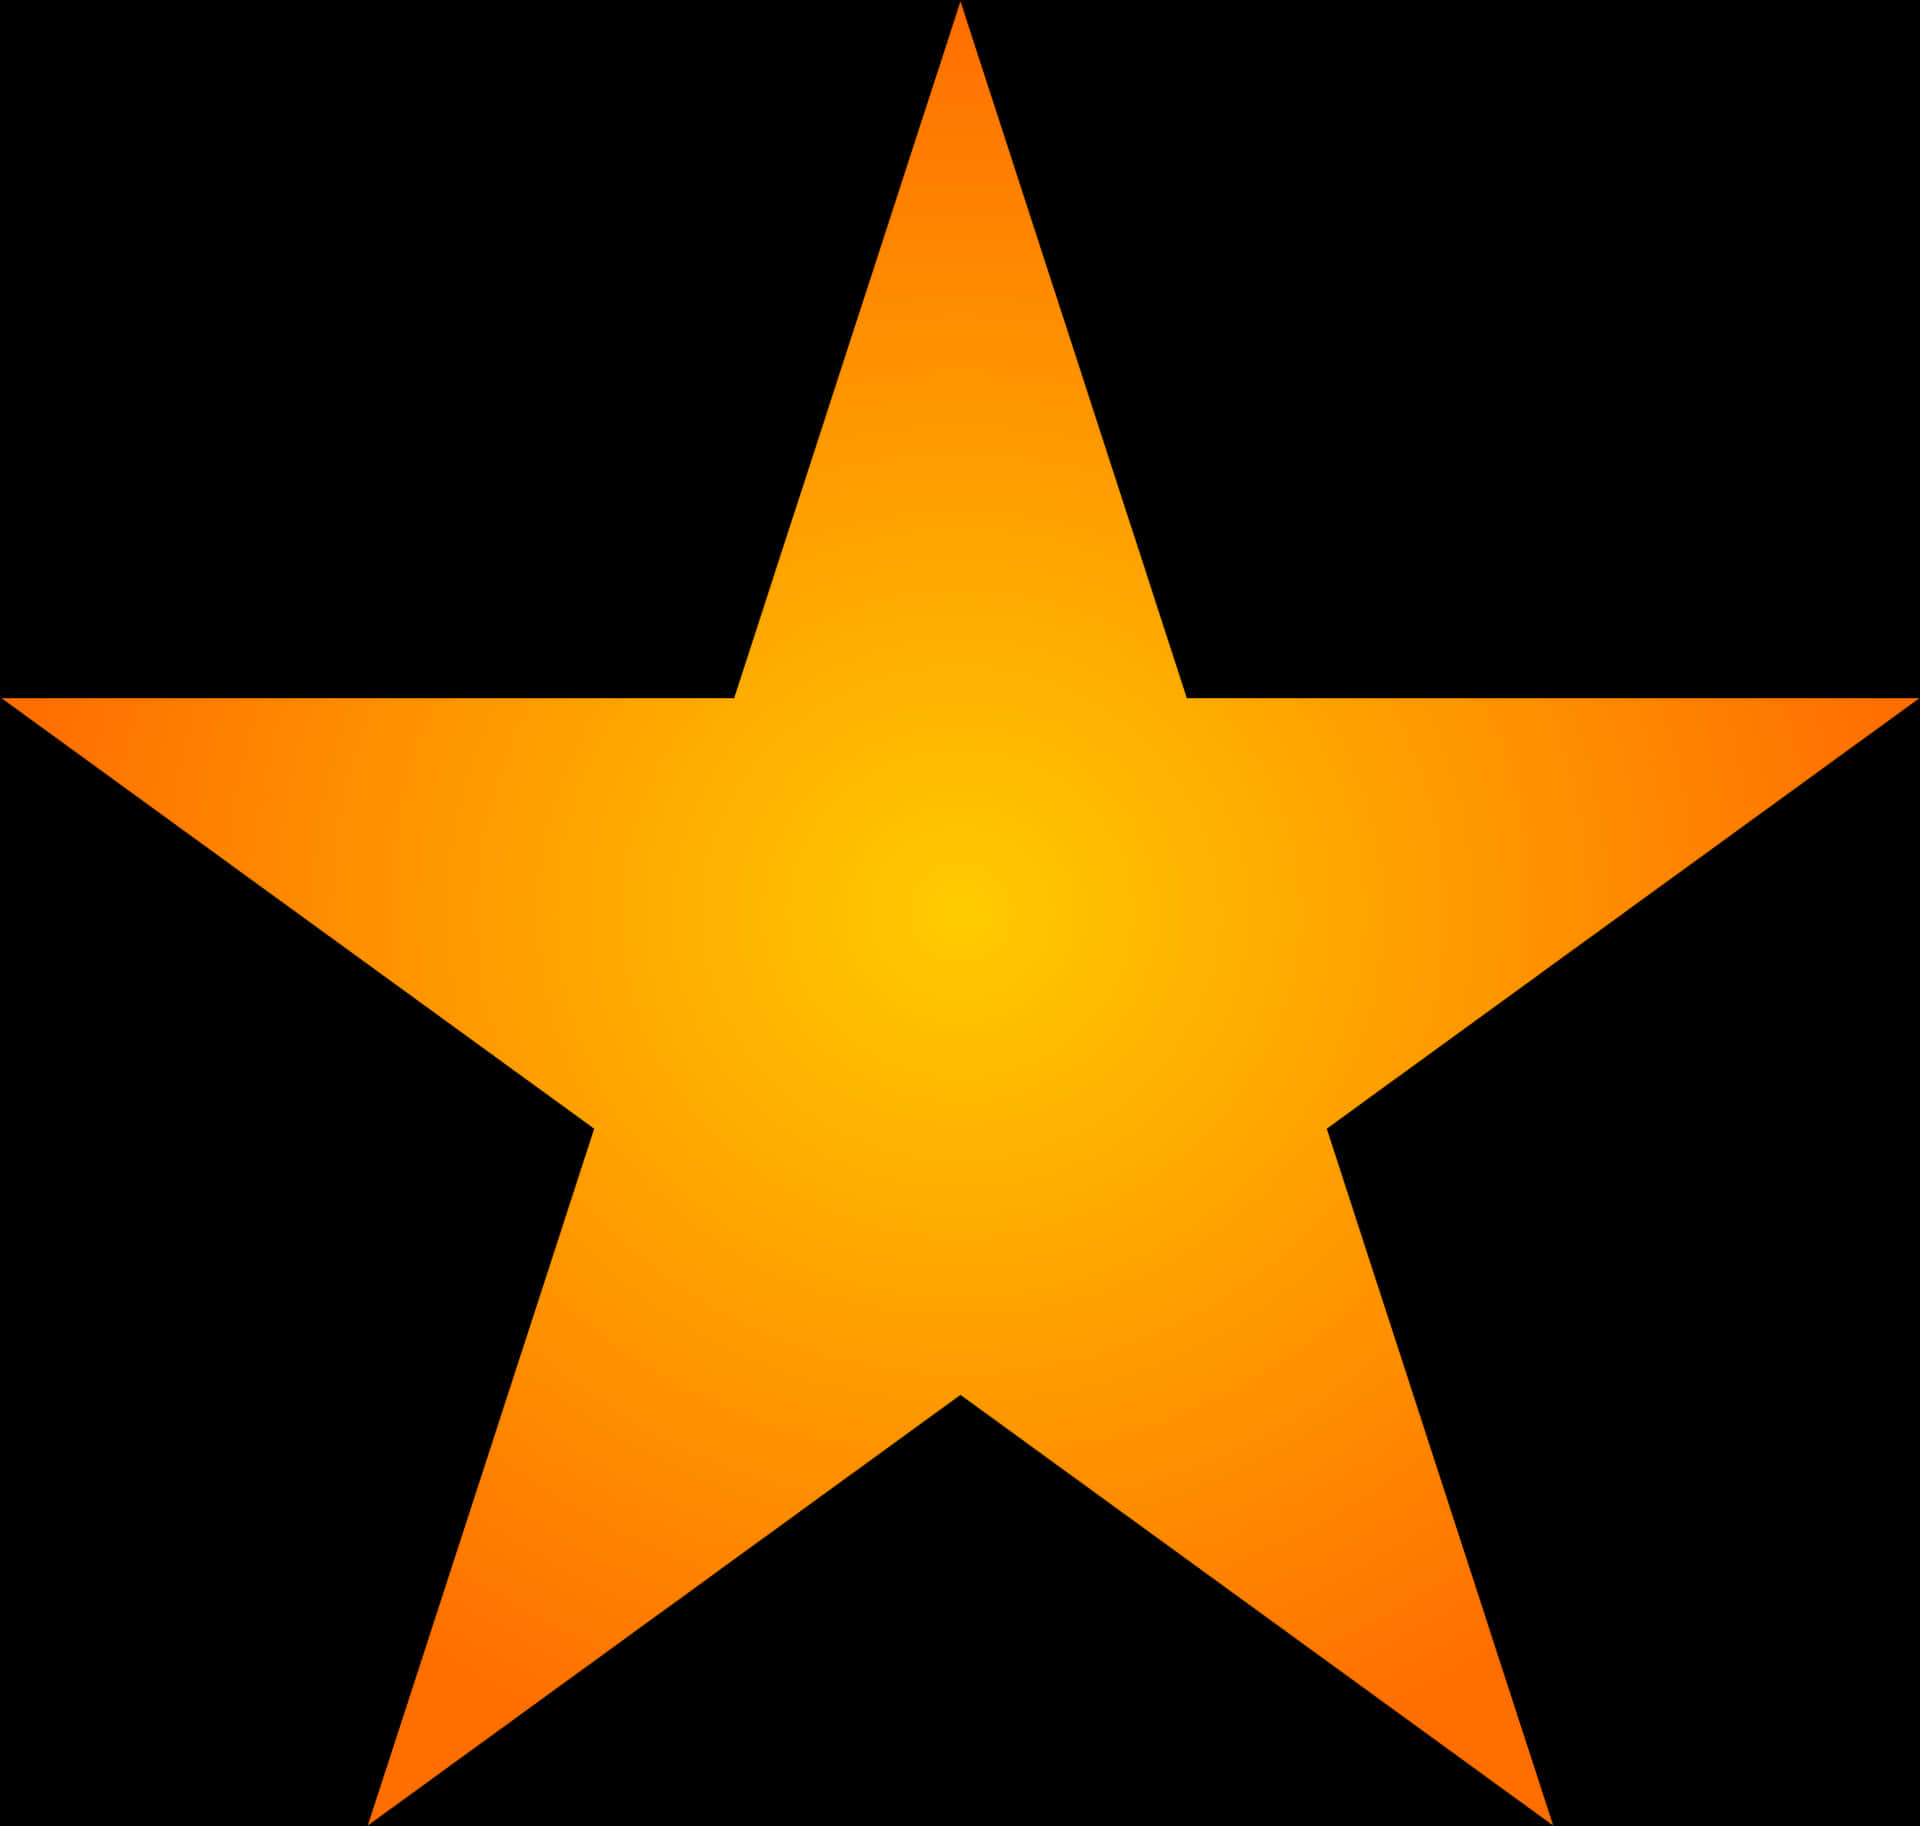 Radiant Orange Star Graphic PNG image